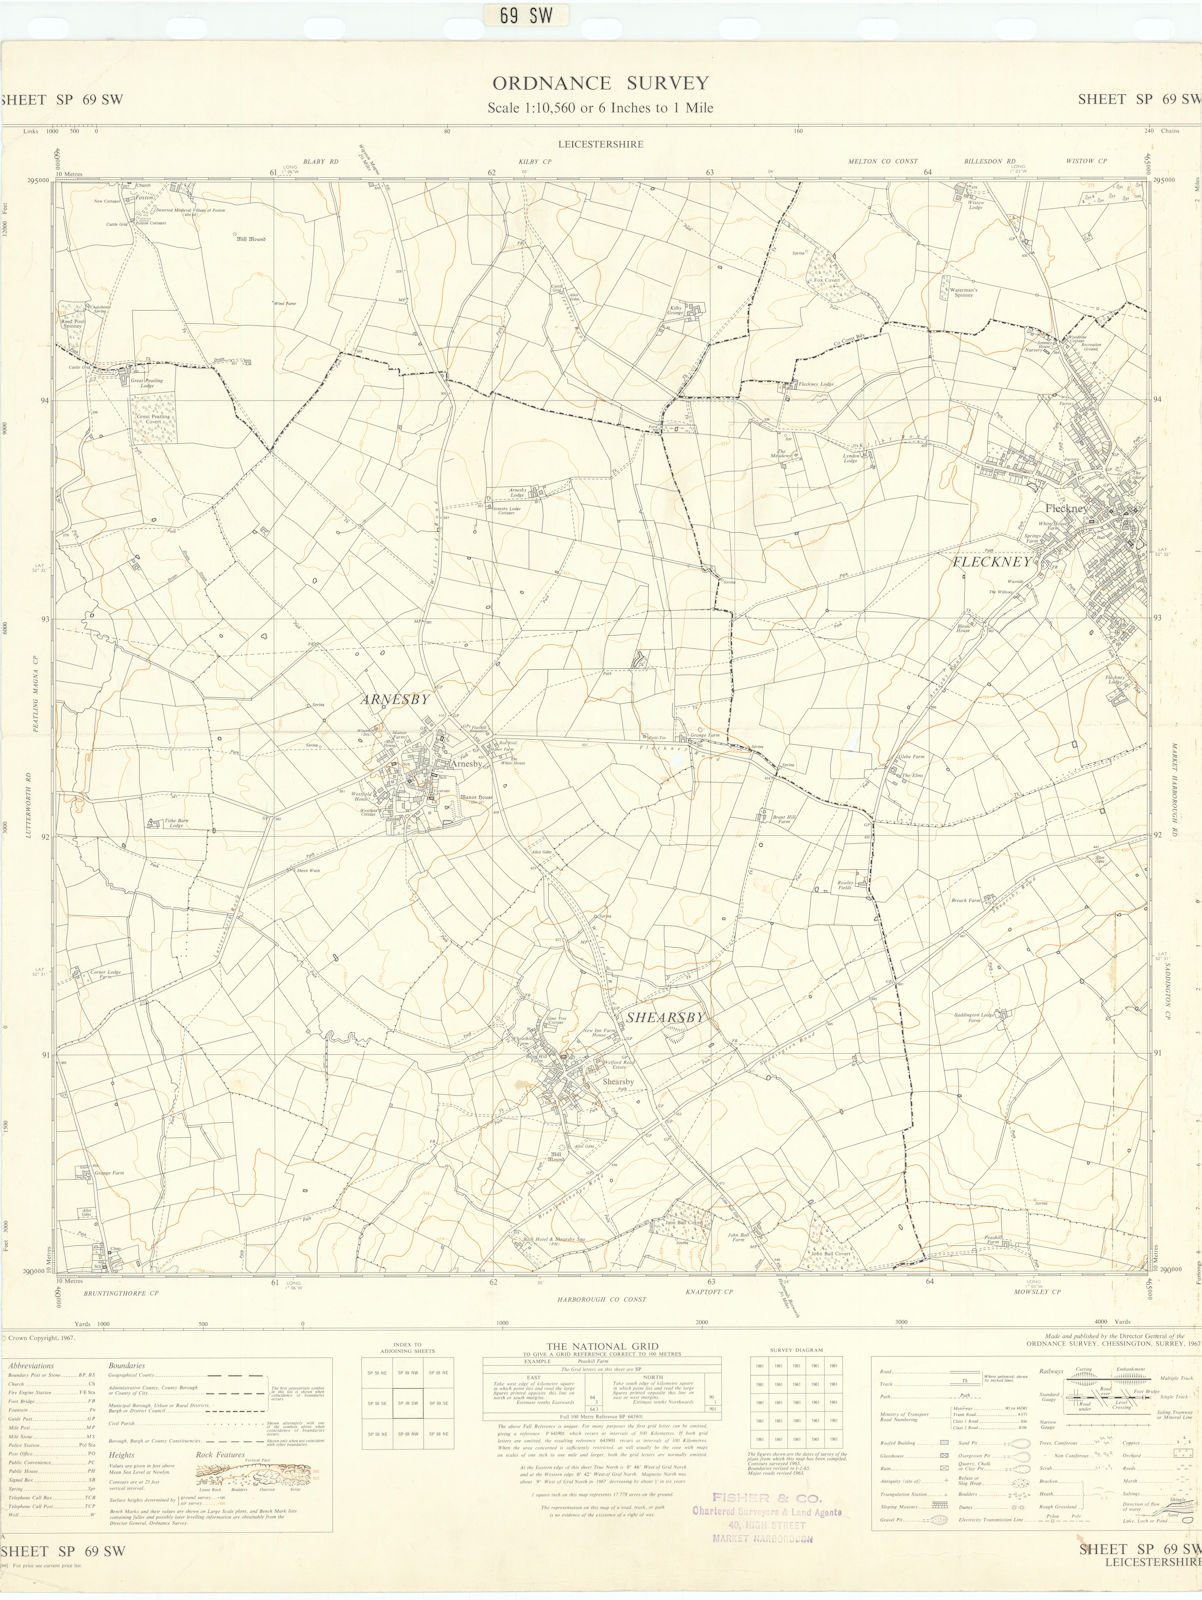 Ordnance Survey Sheet SP69SW Northamptonshire Fleckney Arnesby Shearsby 1967 map